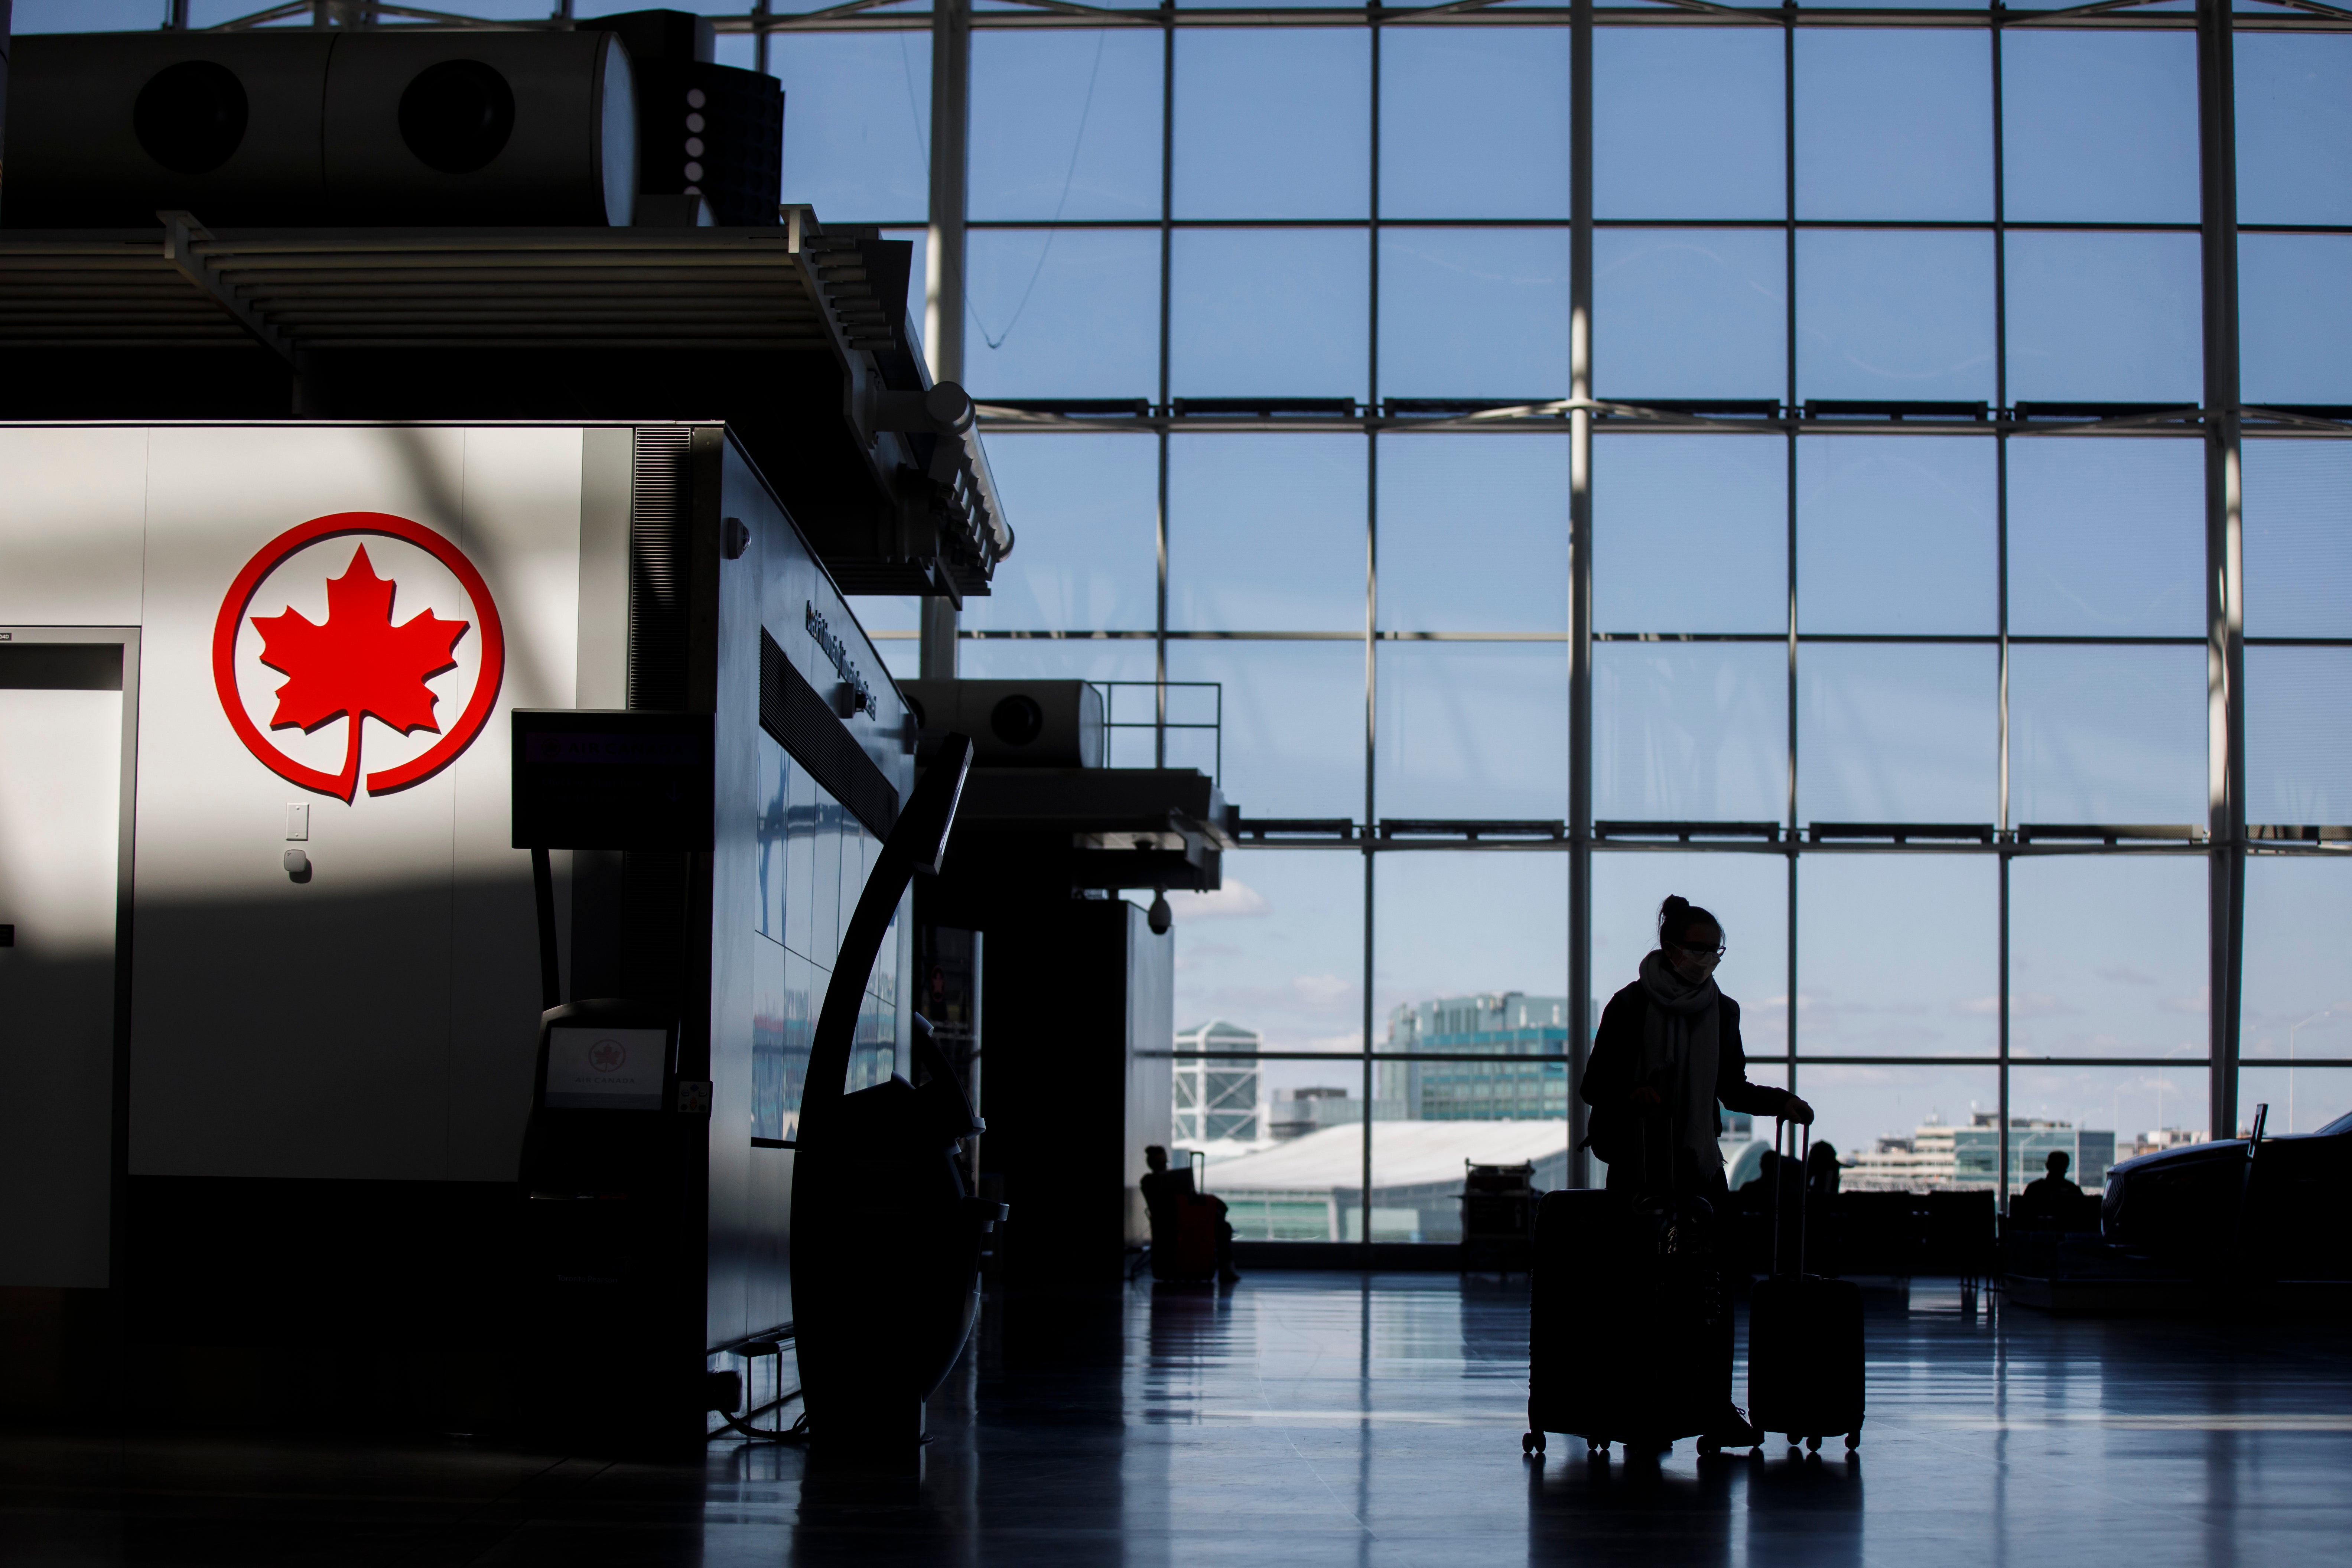 Sky high prices: Air Canada’s premium economy offering is quite spendy